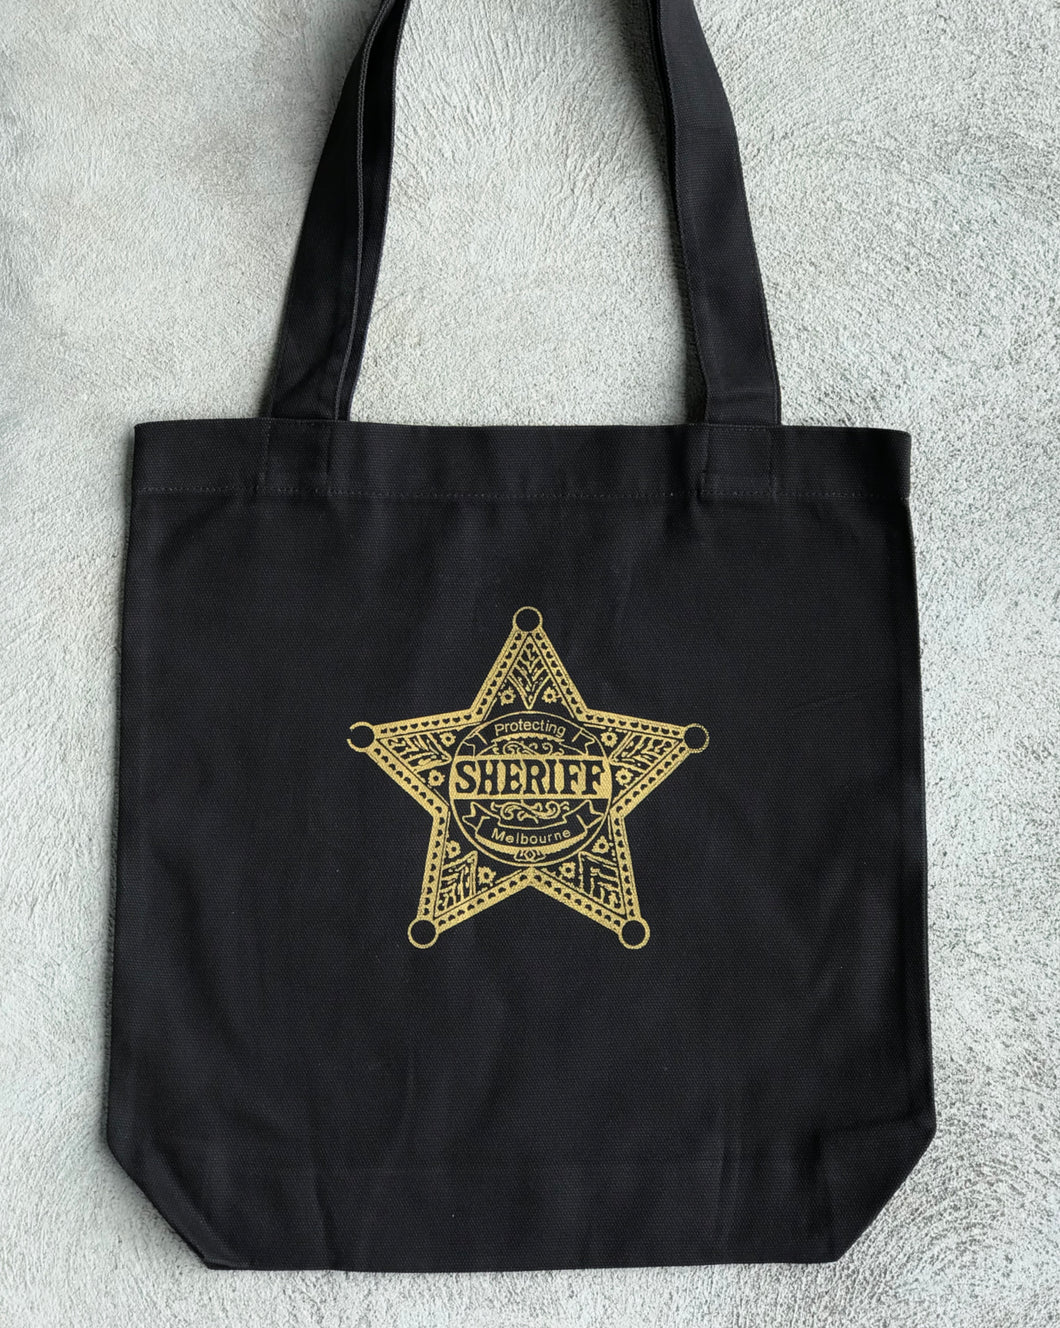 Screen printed tote bag - Sheriff